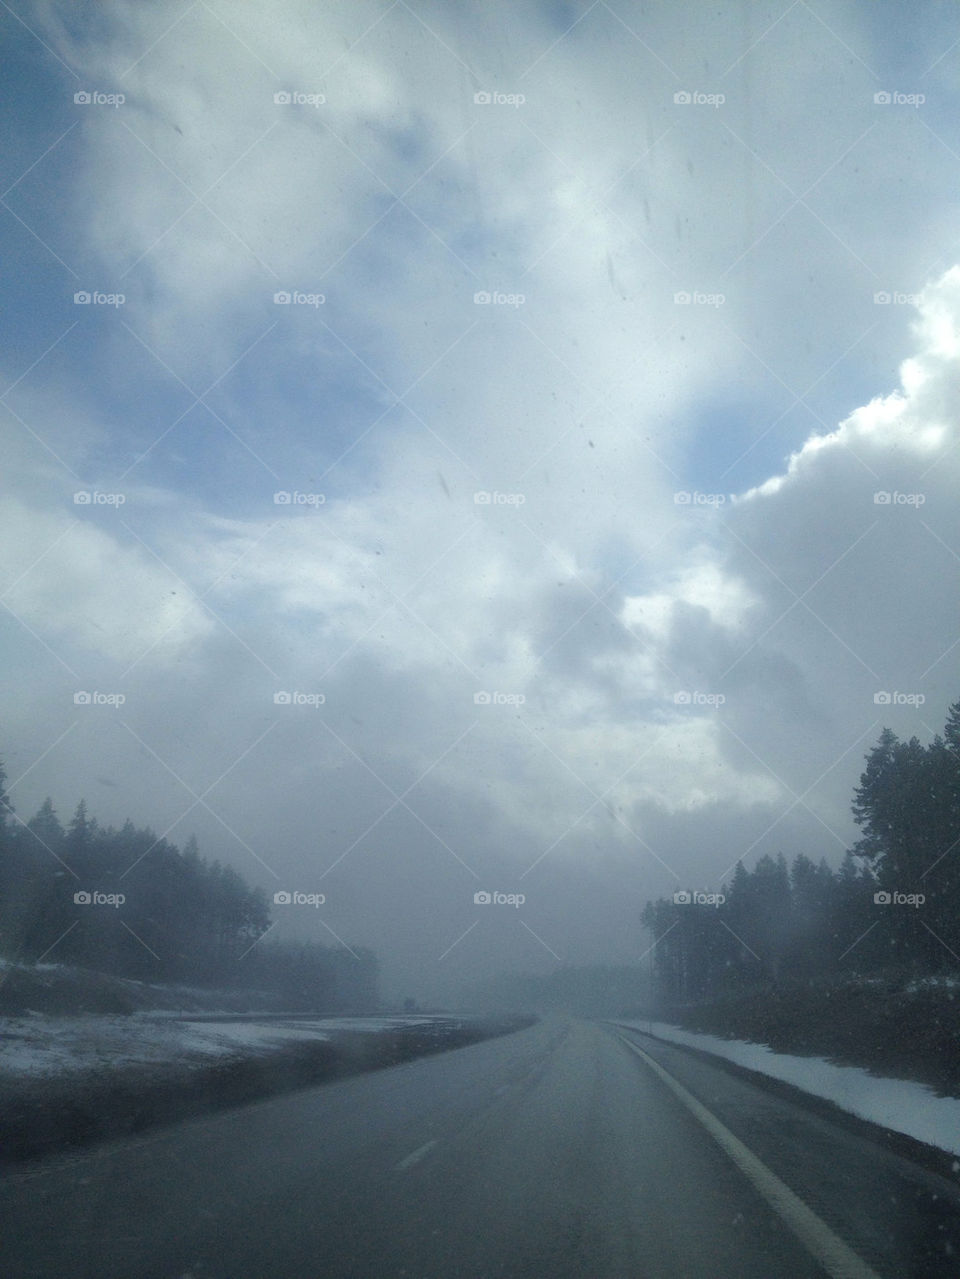 weather väder e4 on my way home by birrber